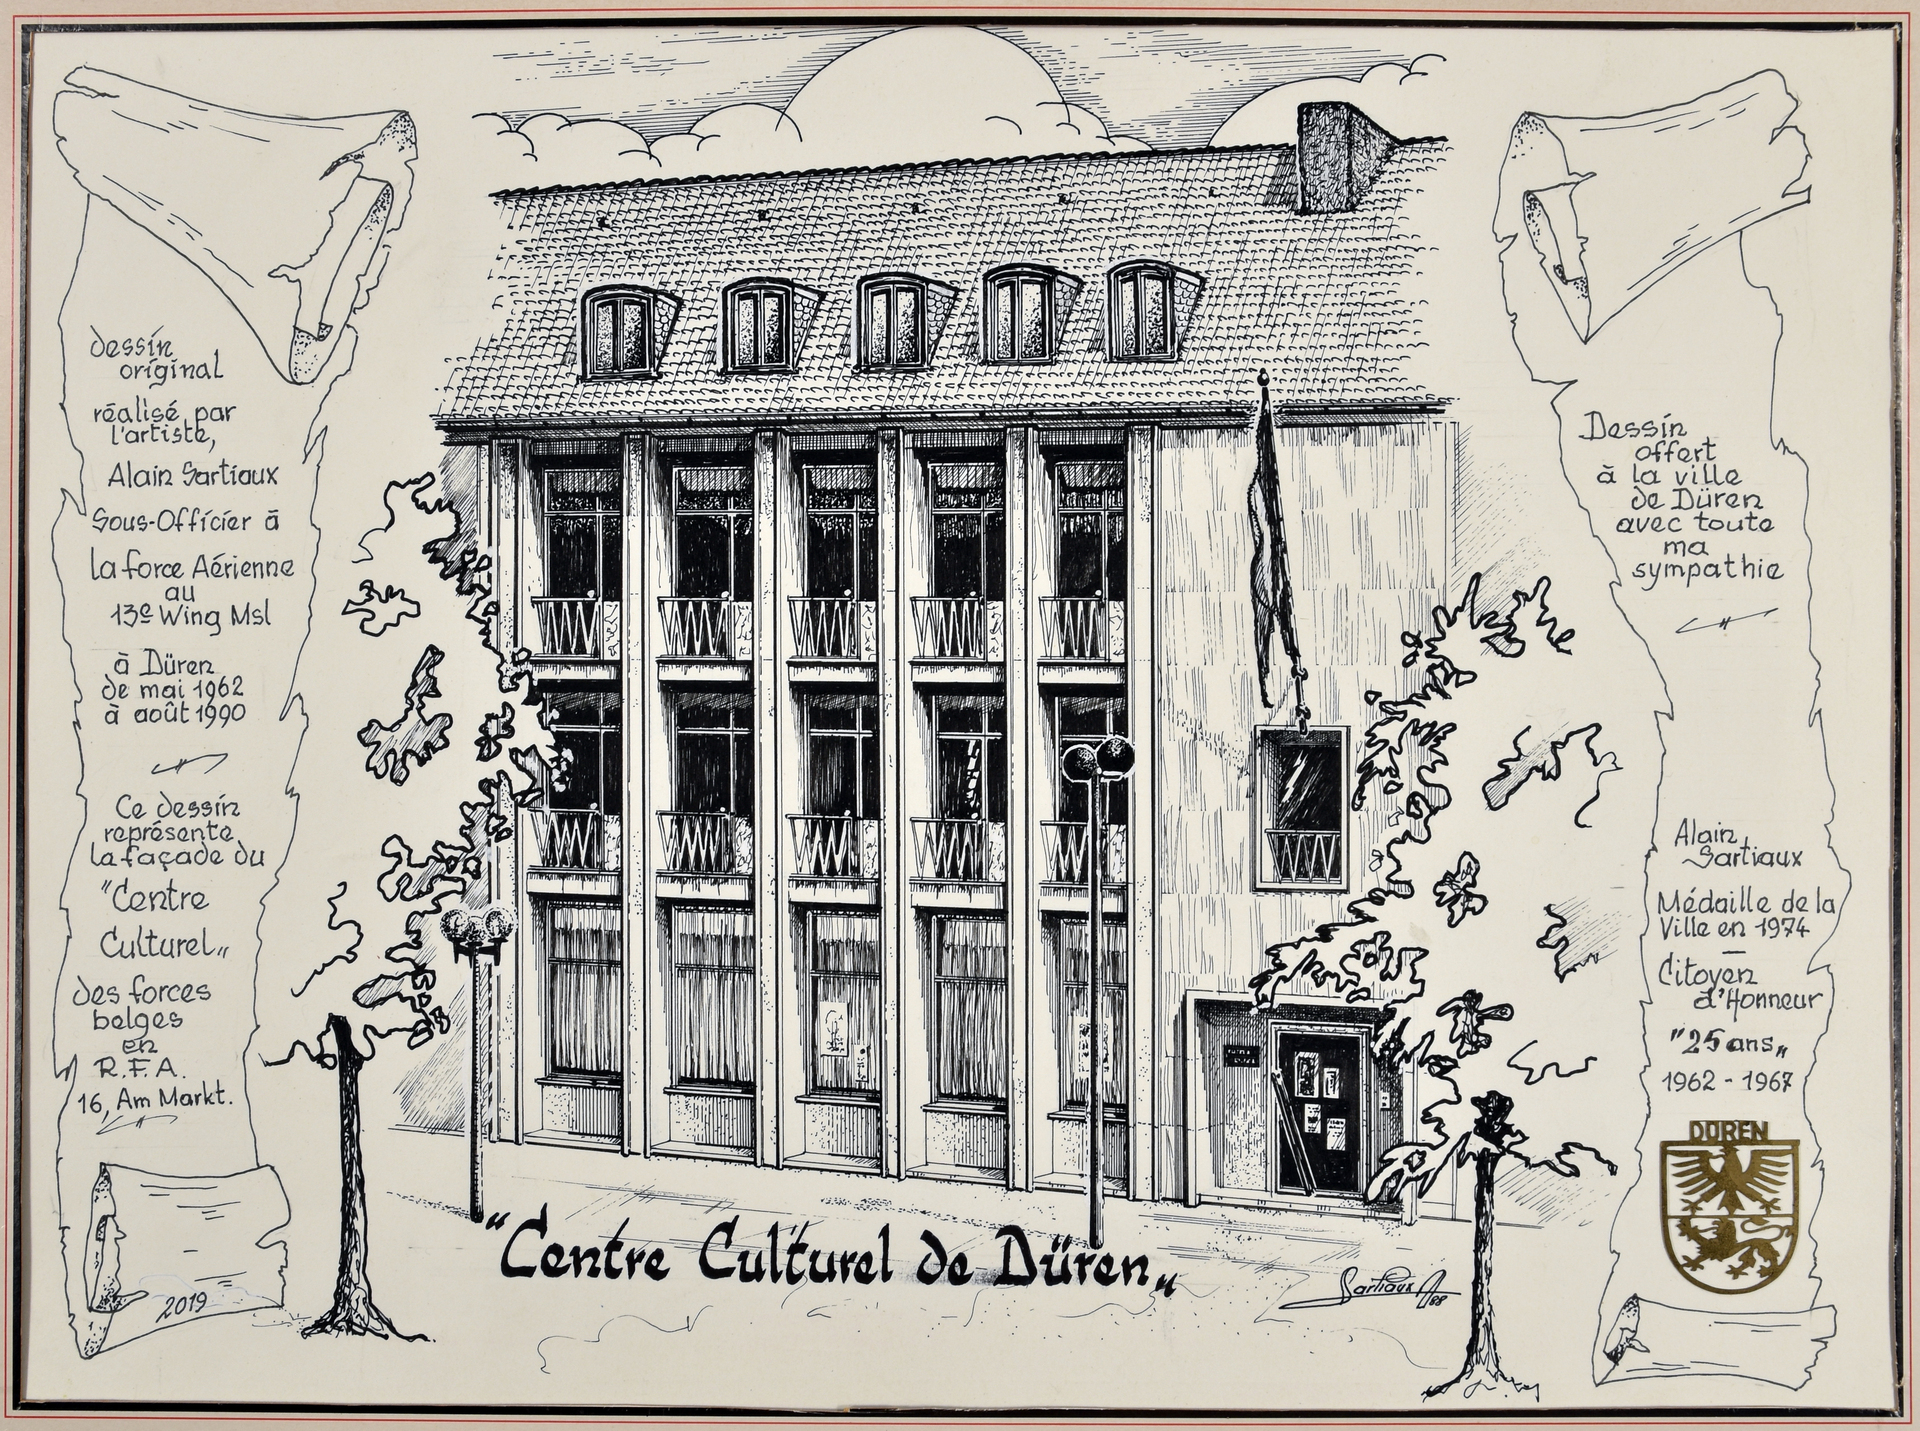 Bild 6_Zeichnung des Gebäudes Markt 16, heute Café Extrablatt, früher Centre culturel de Düren_AlainSartiaux.jpg